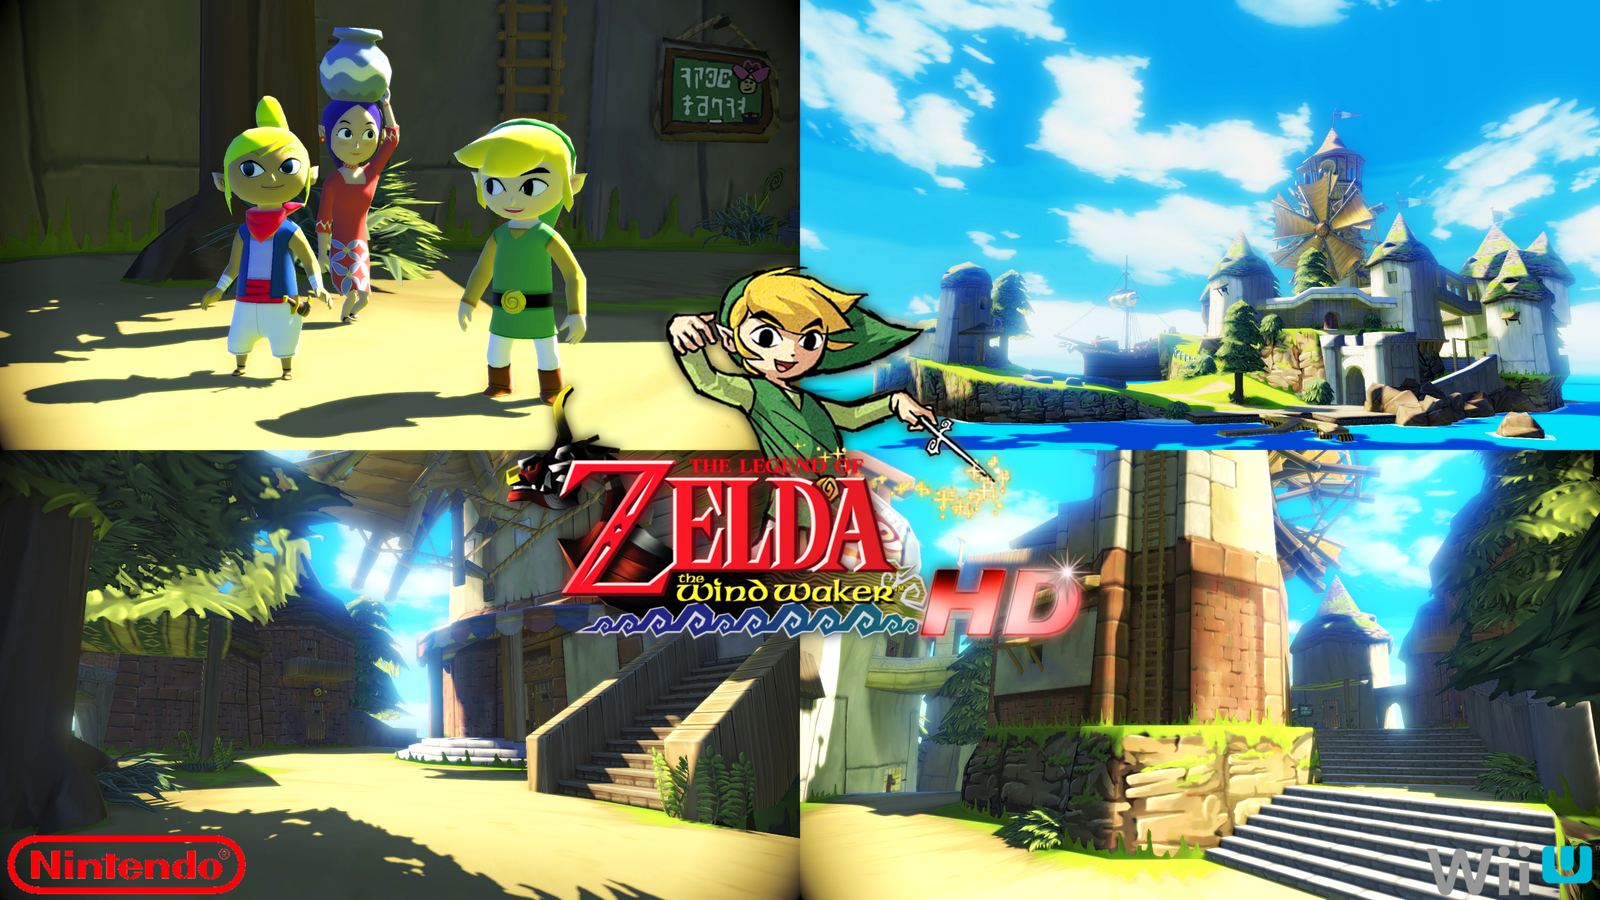 The Legend Of Zelda: The Wind Waker HD Wii U Review